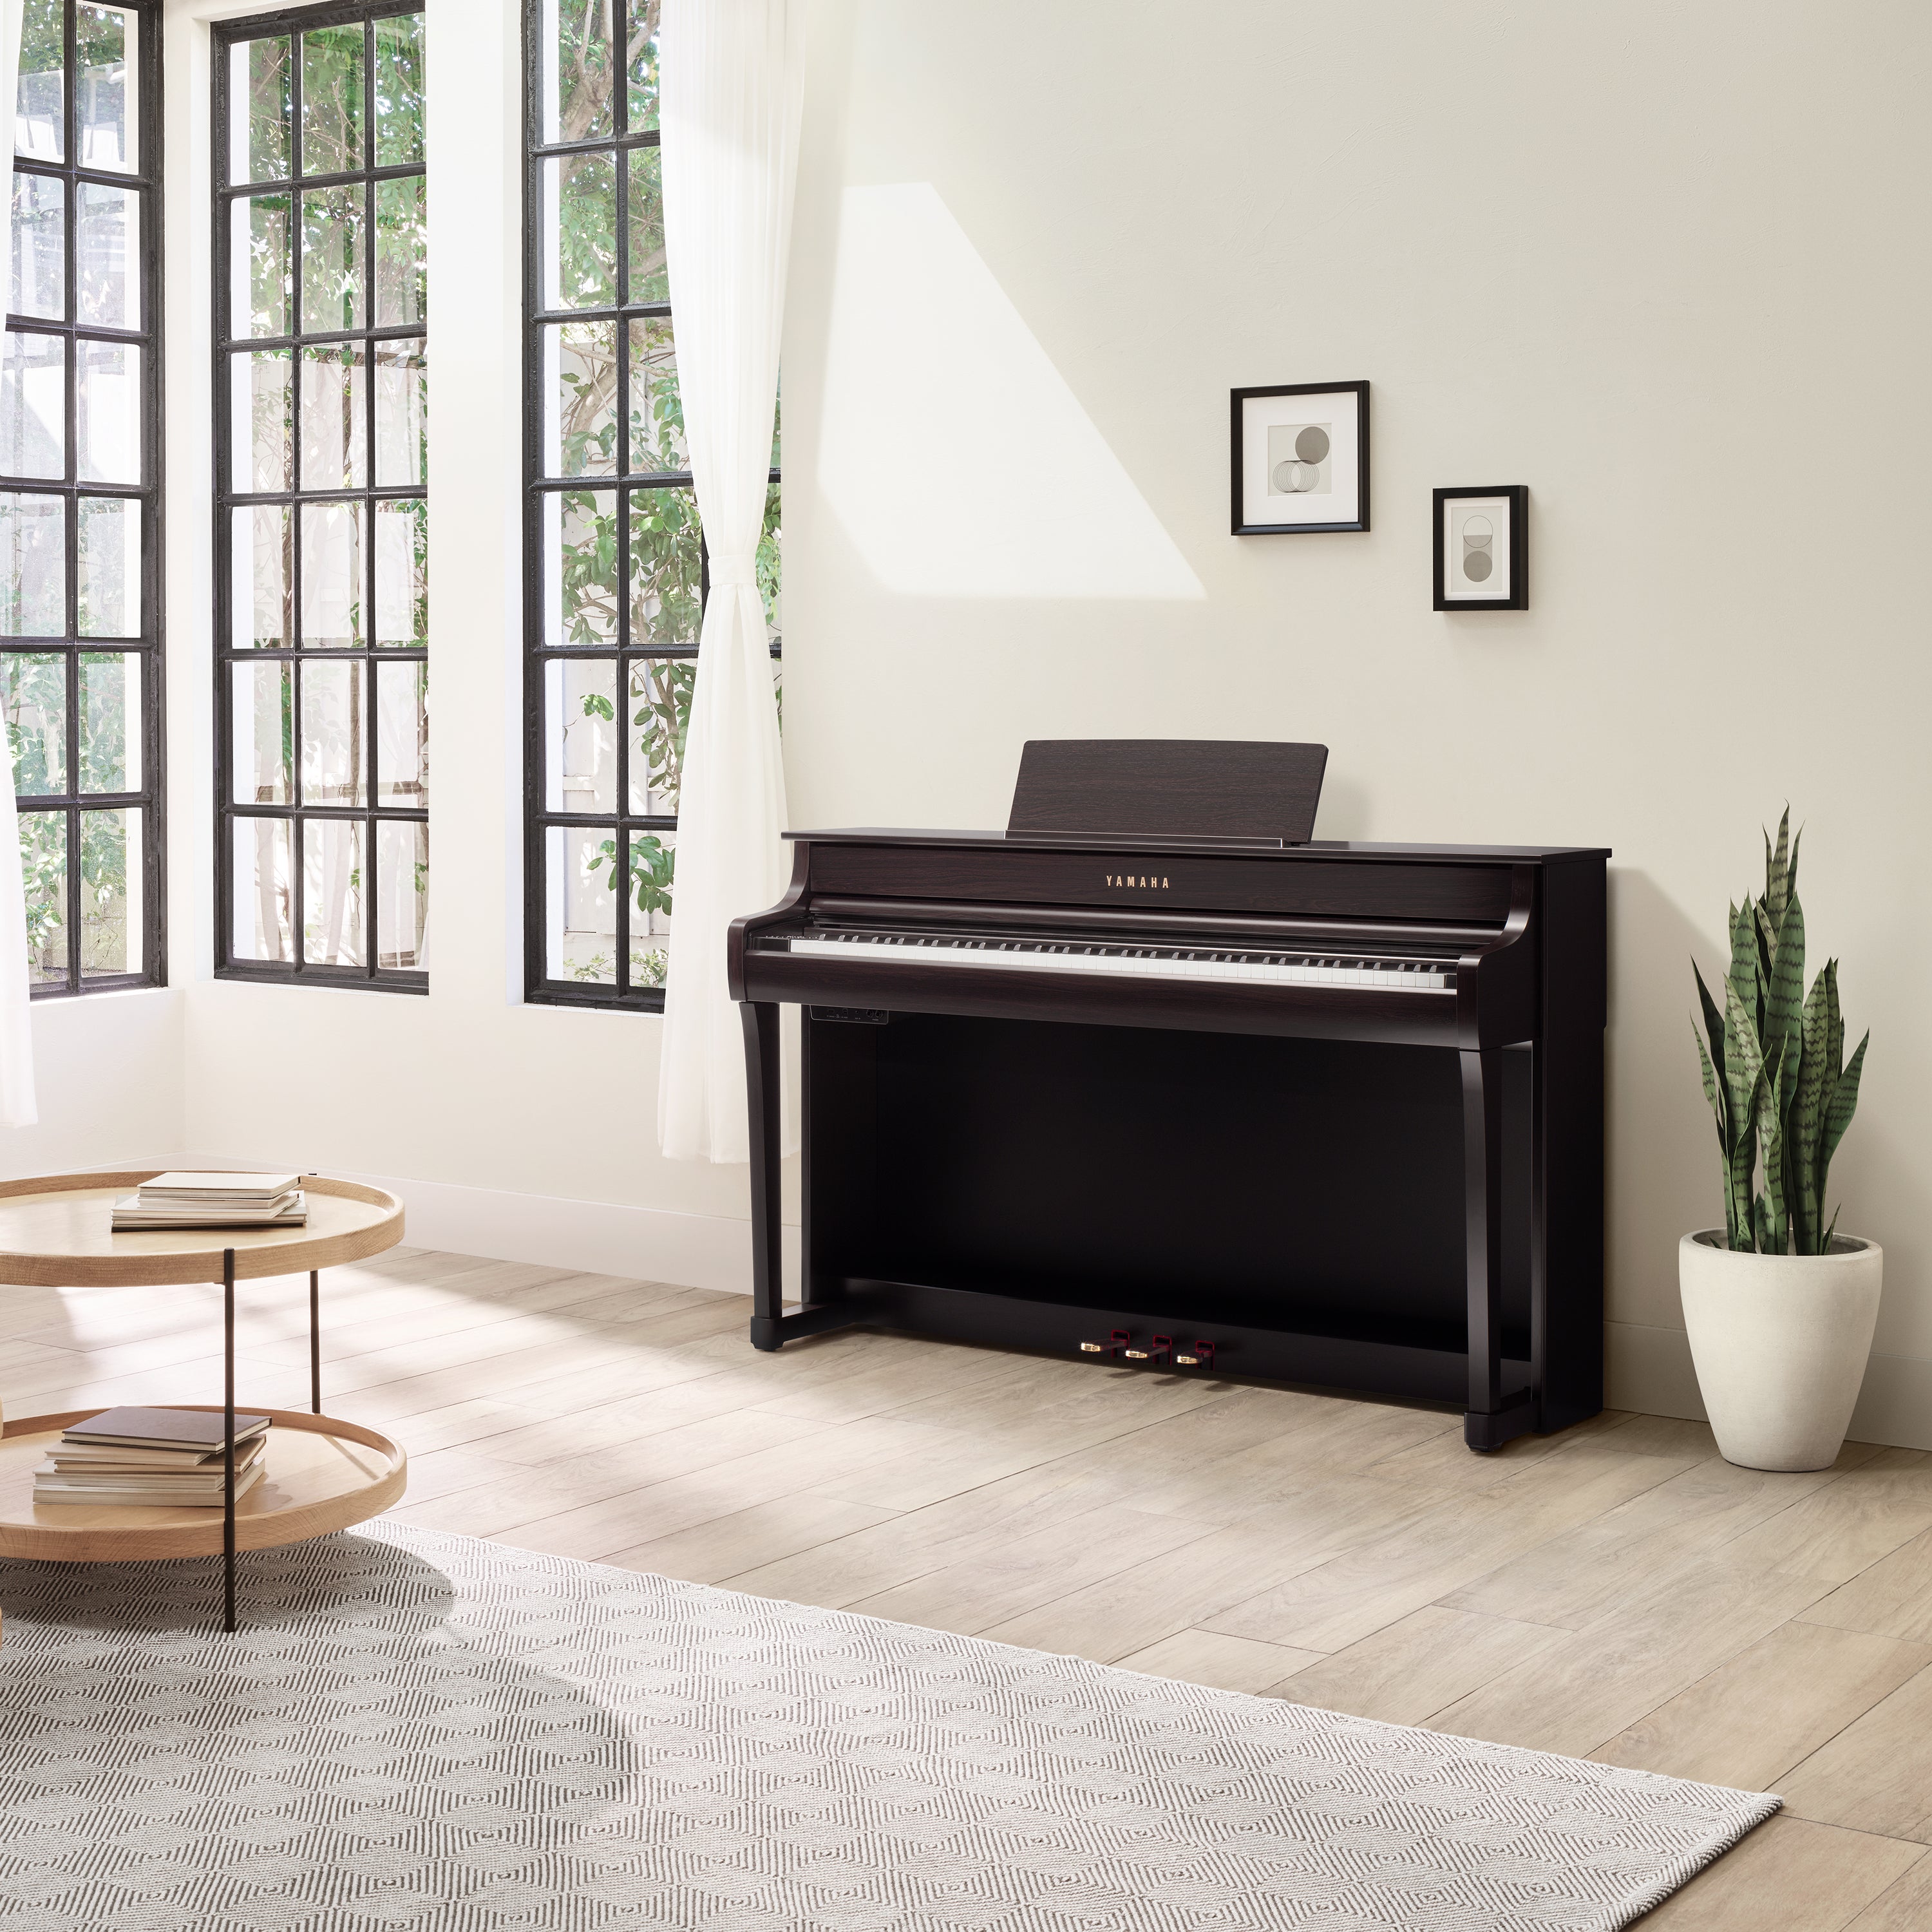 Yamaha Clavinova CLP-835 Digital Piano - Rosewood in a stylish room